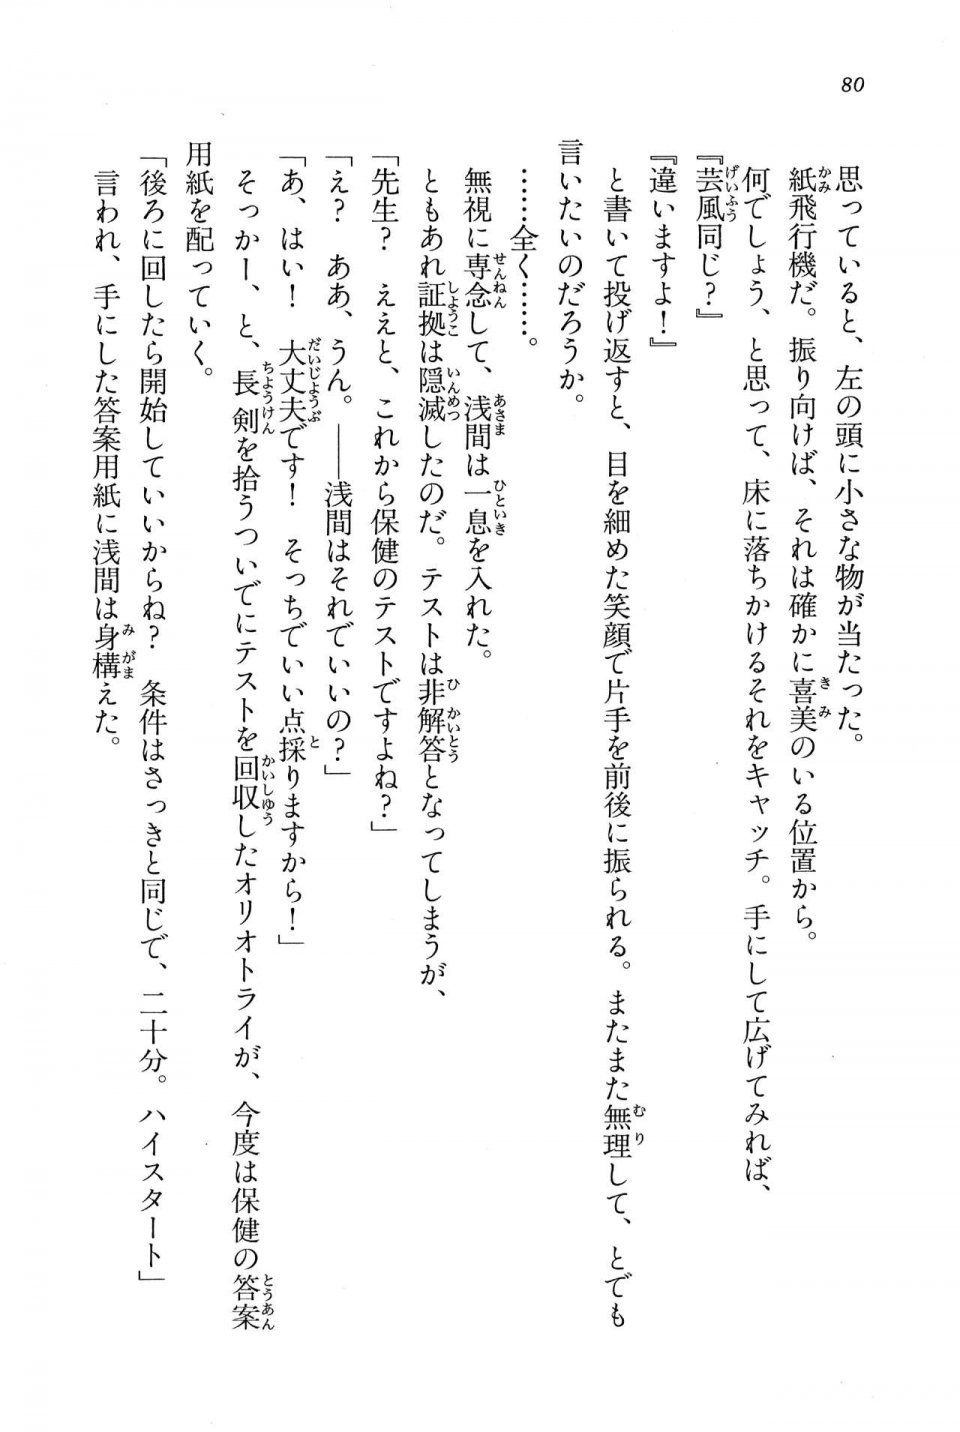 Kyoukai Senjou no Horizon BD Special Mininovel Vol 7(4A) - Photo #84